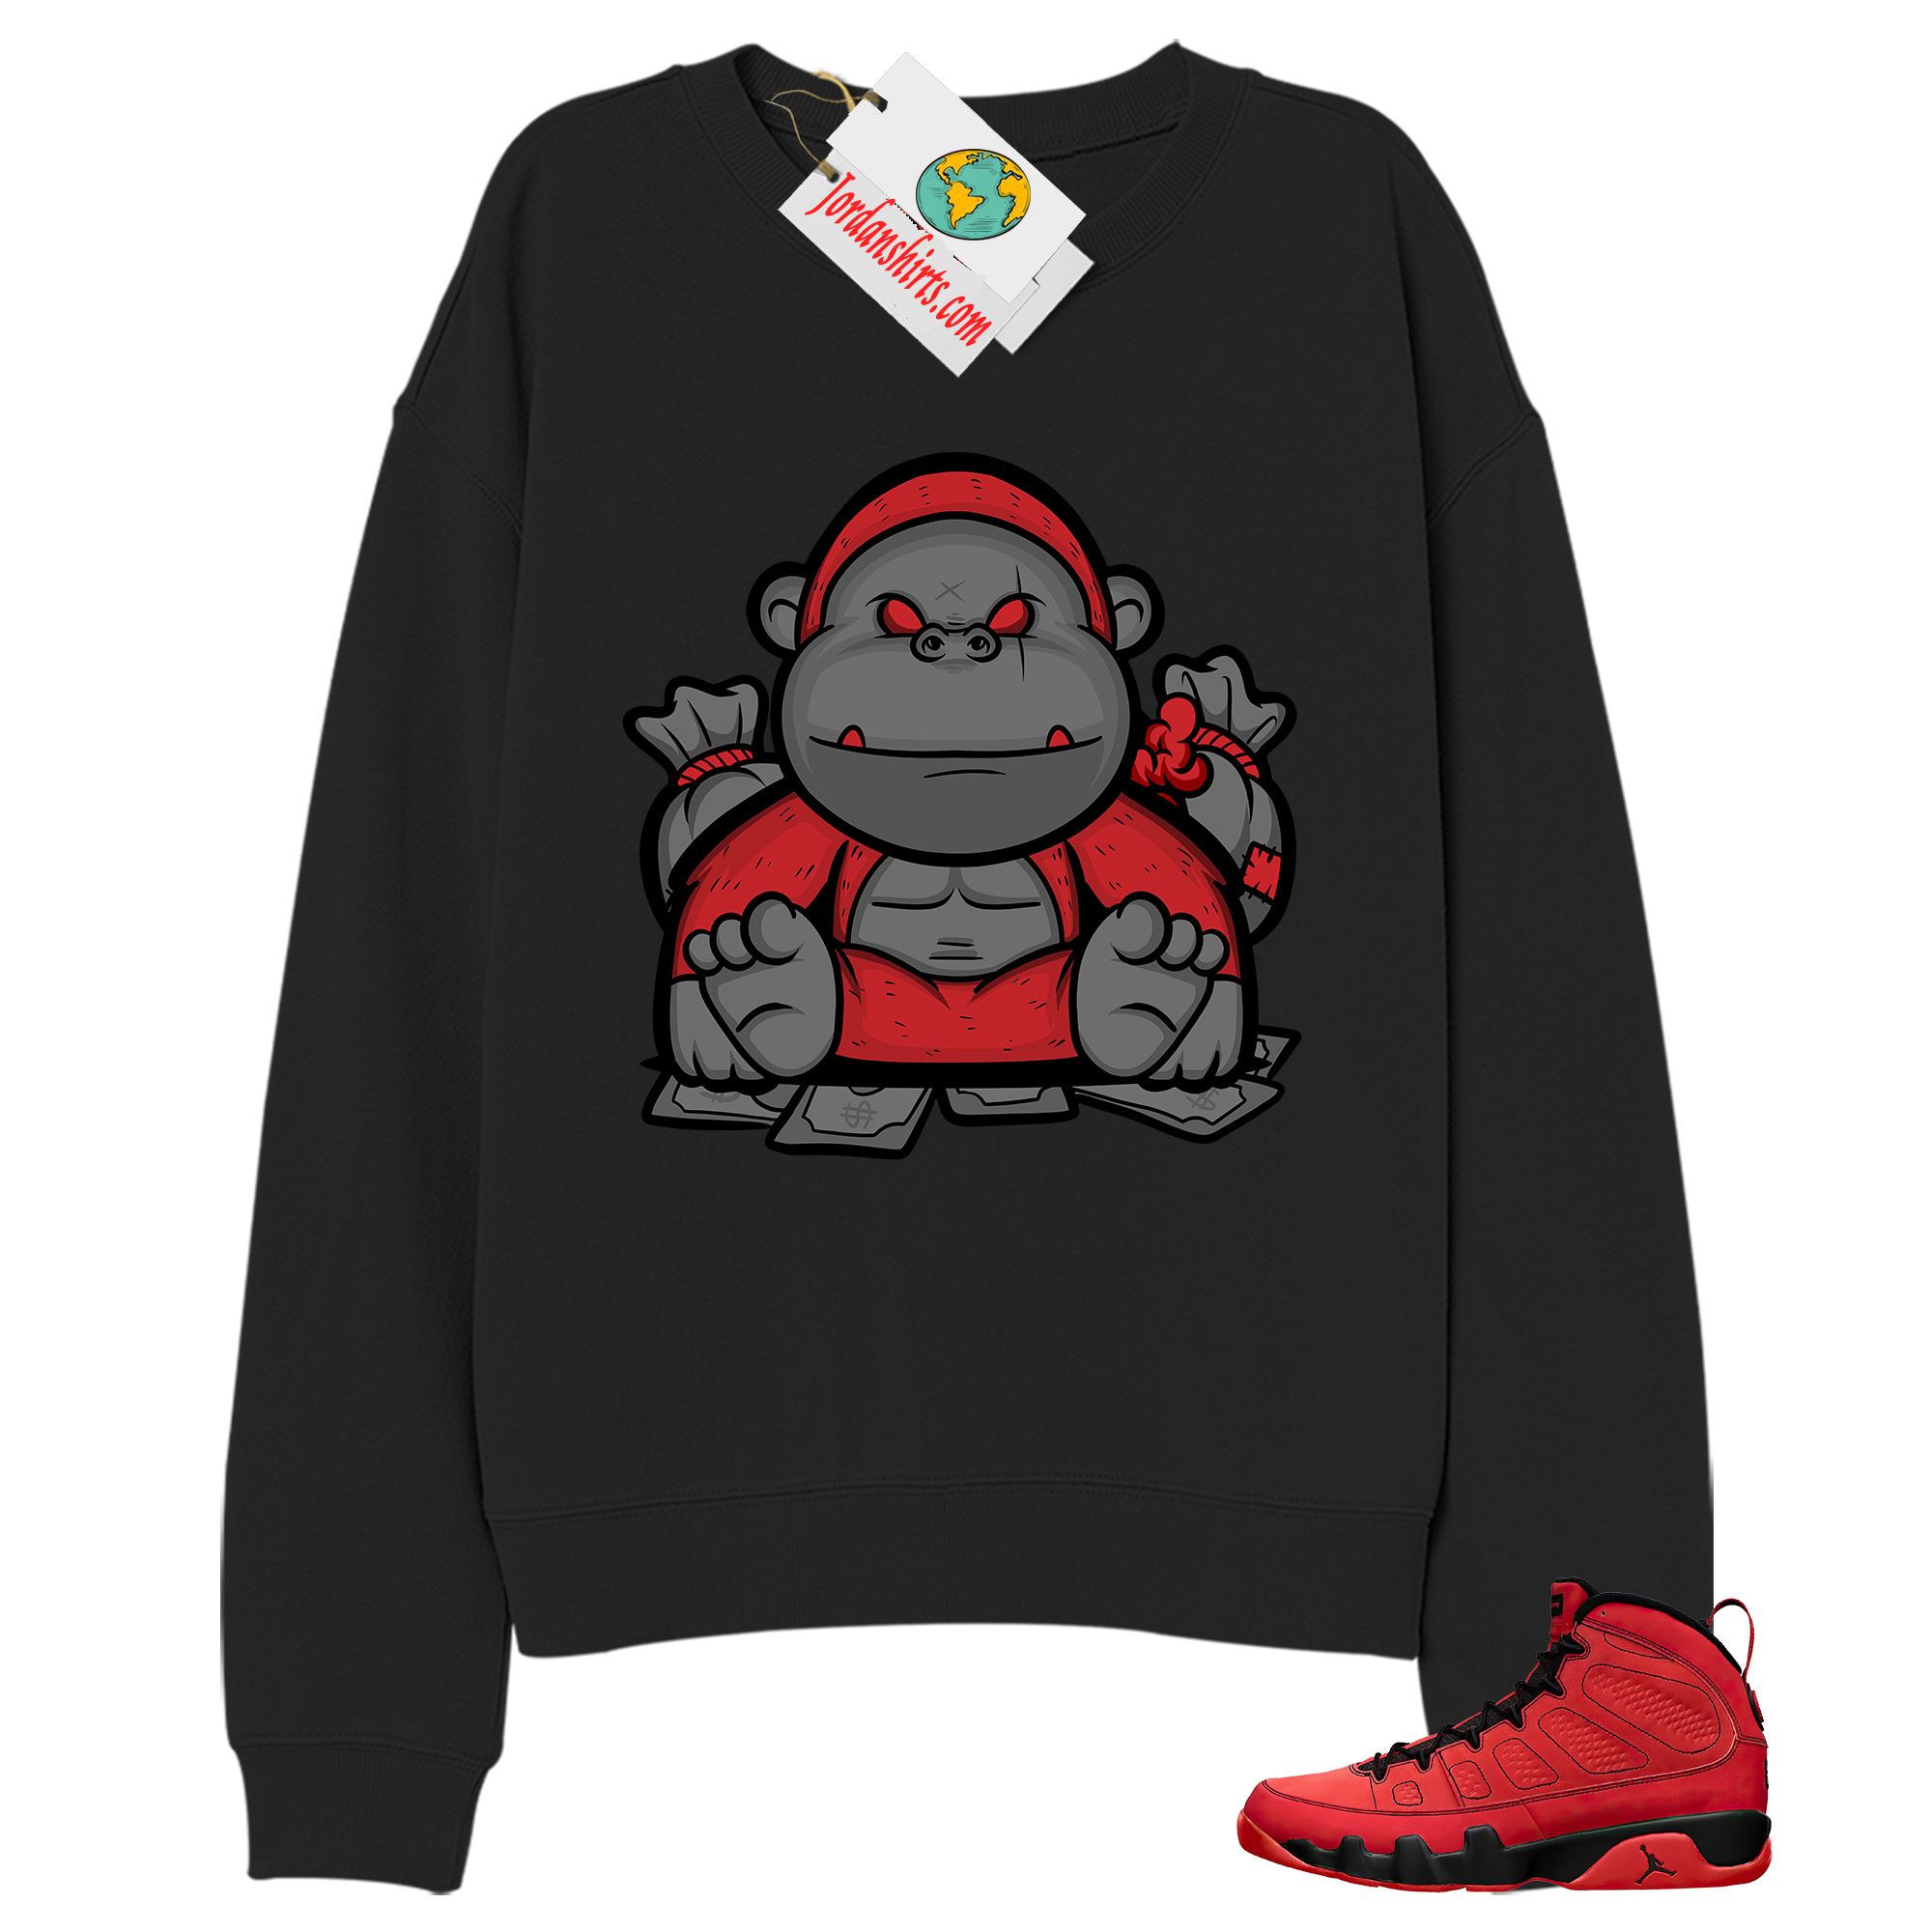 Jordan 9 Sweatshirt, Rich Gorilla With Money Black Sweatshirt Air Jordan 9 Chile Red 9s Full Size Up To 5xl